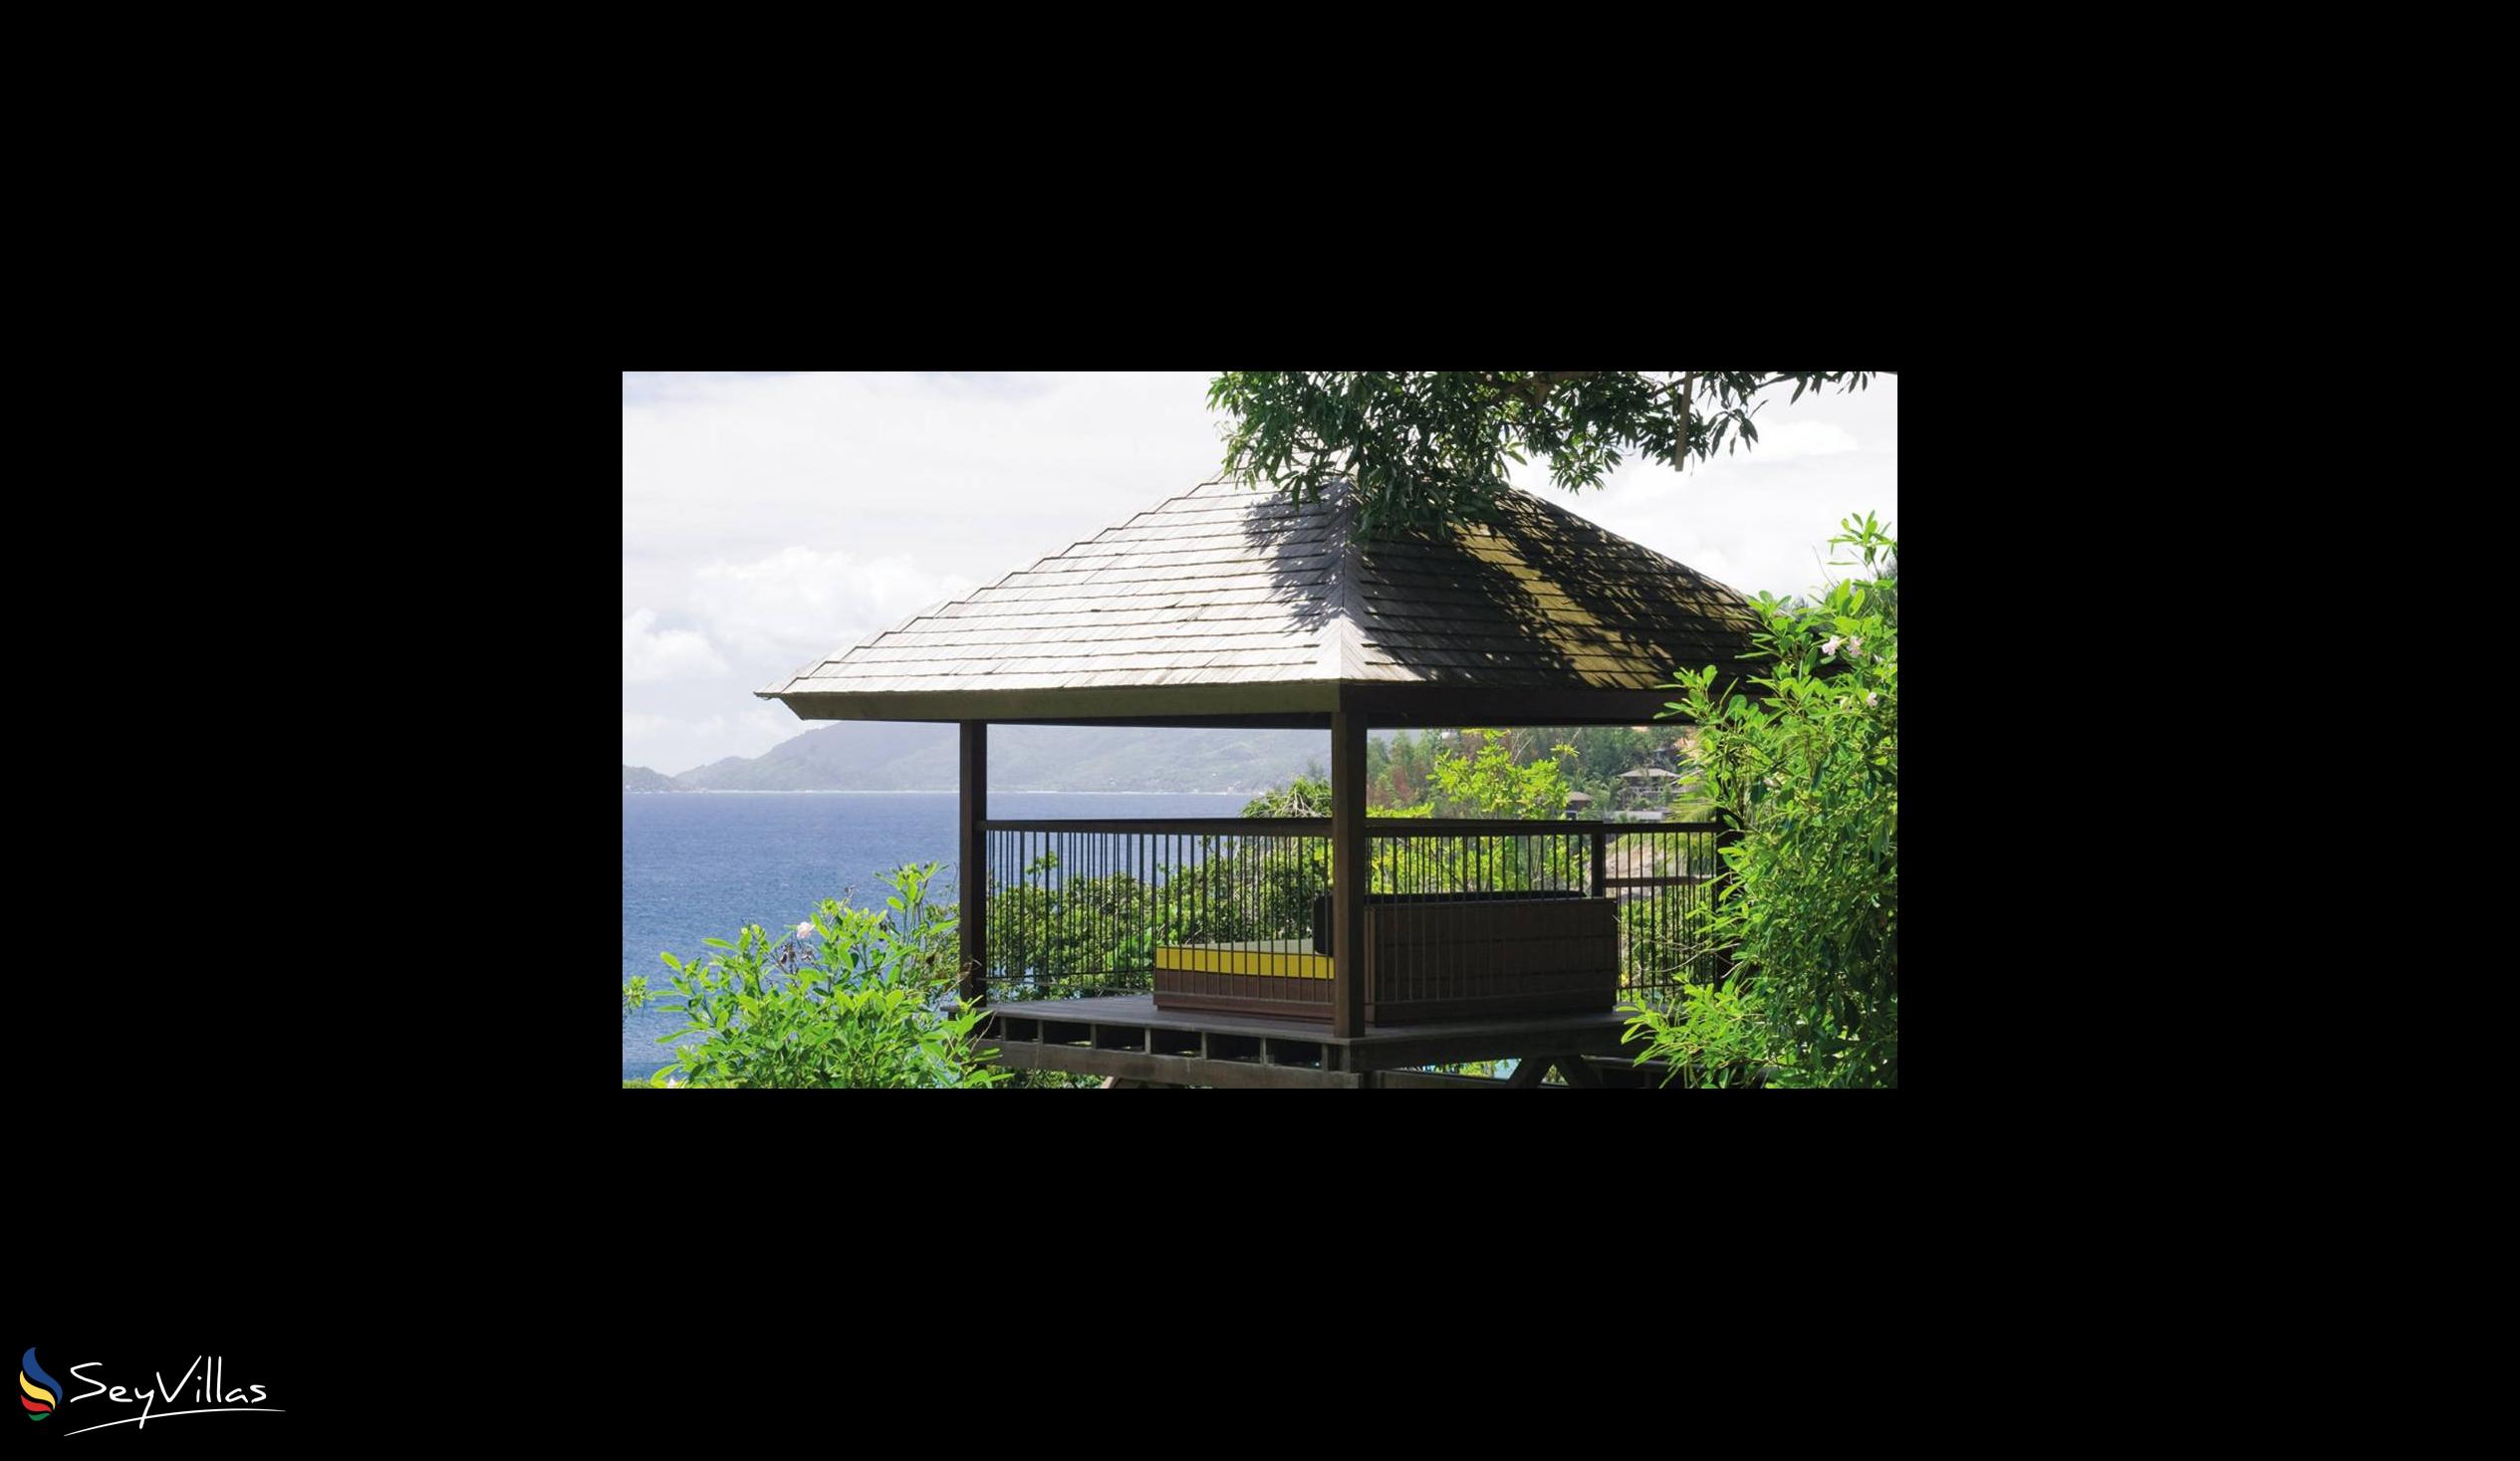 Photo 99: Four Seasons Resort - Ocean View Villa - Mahé (Seychelles)